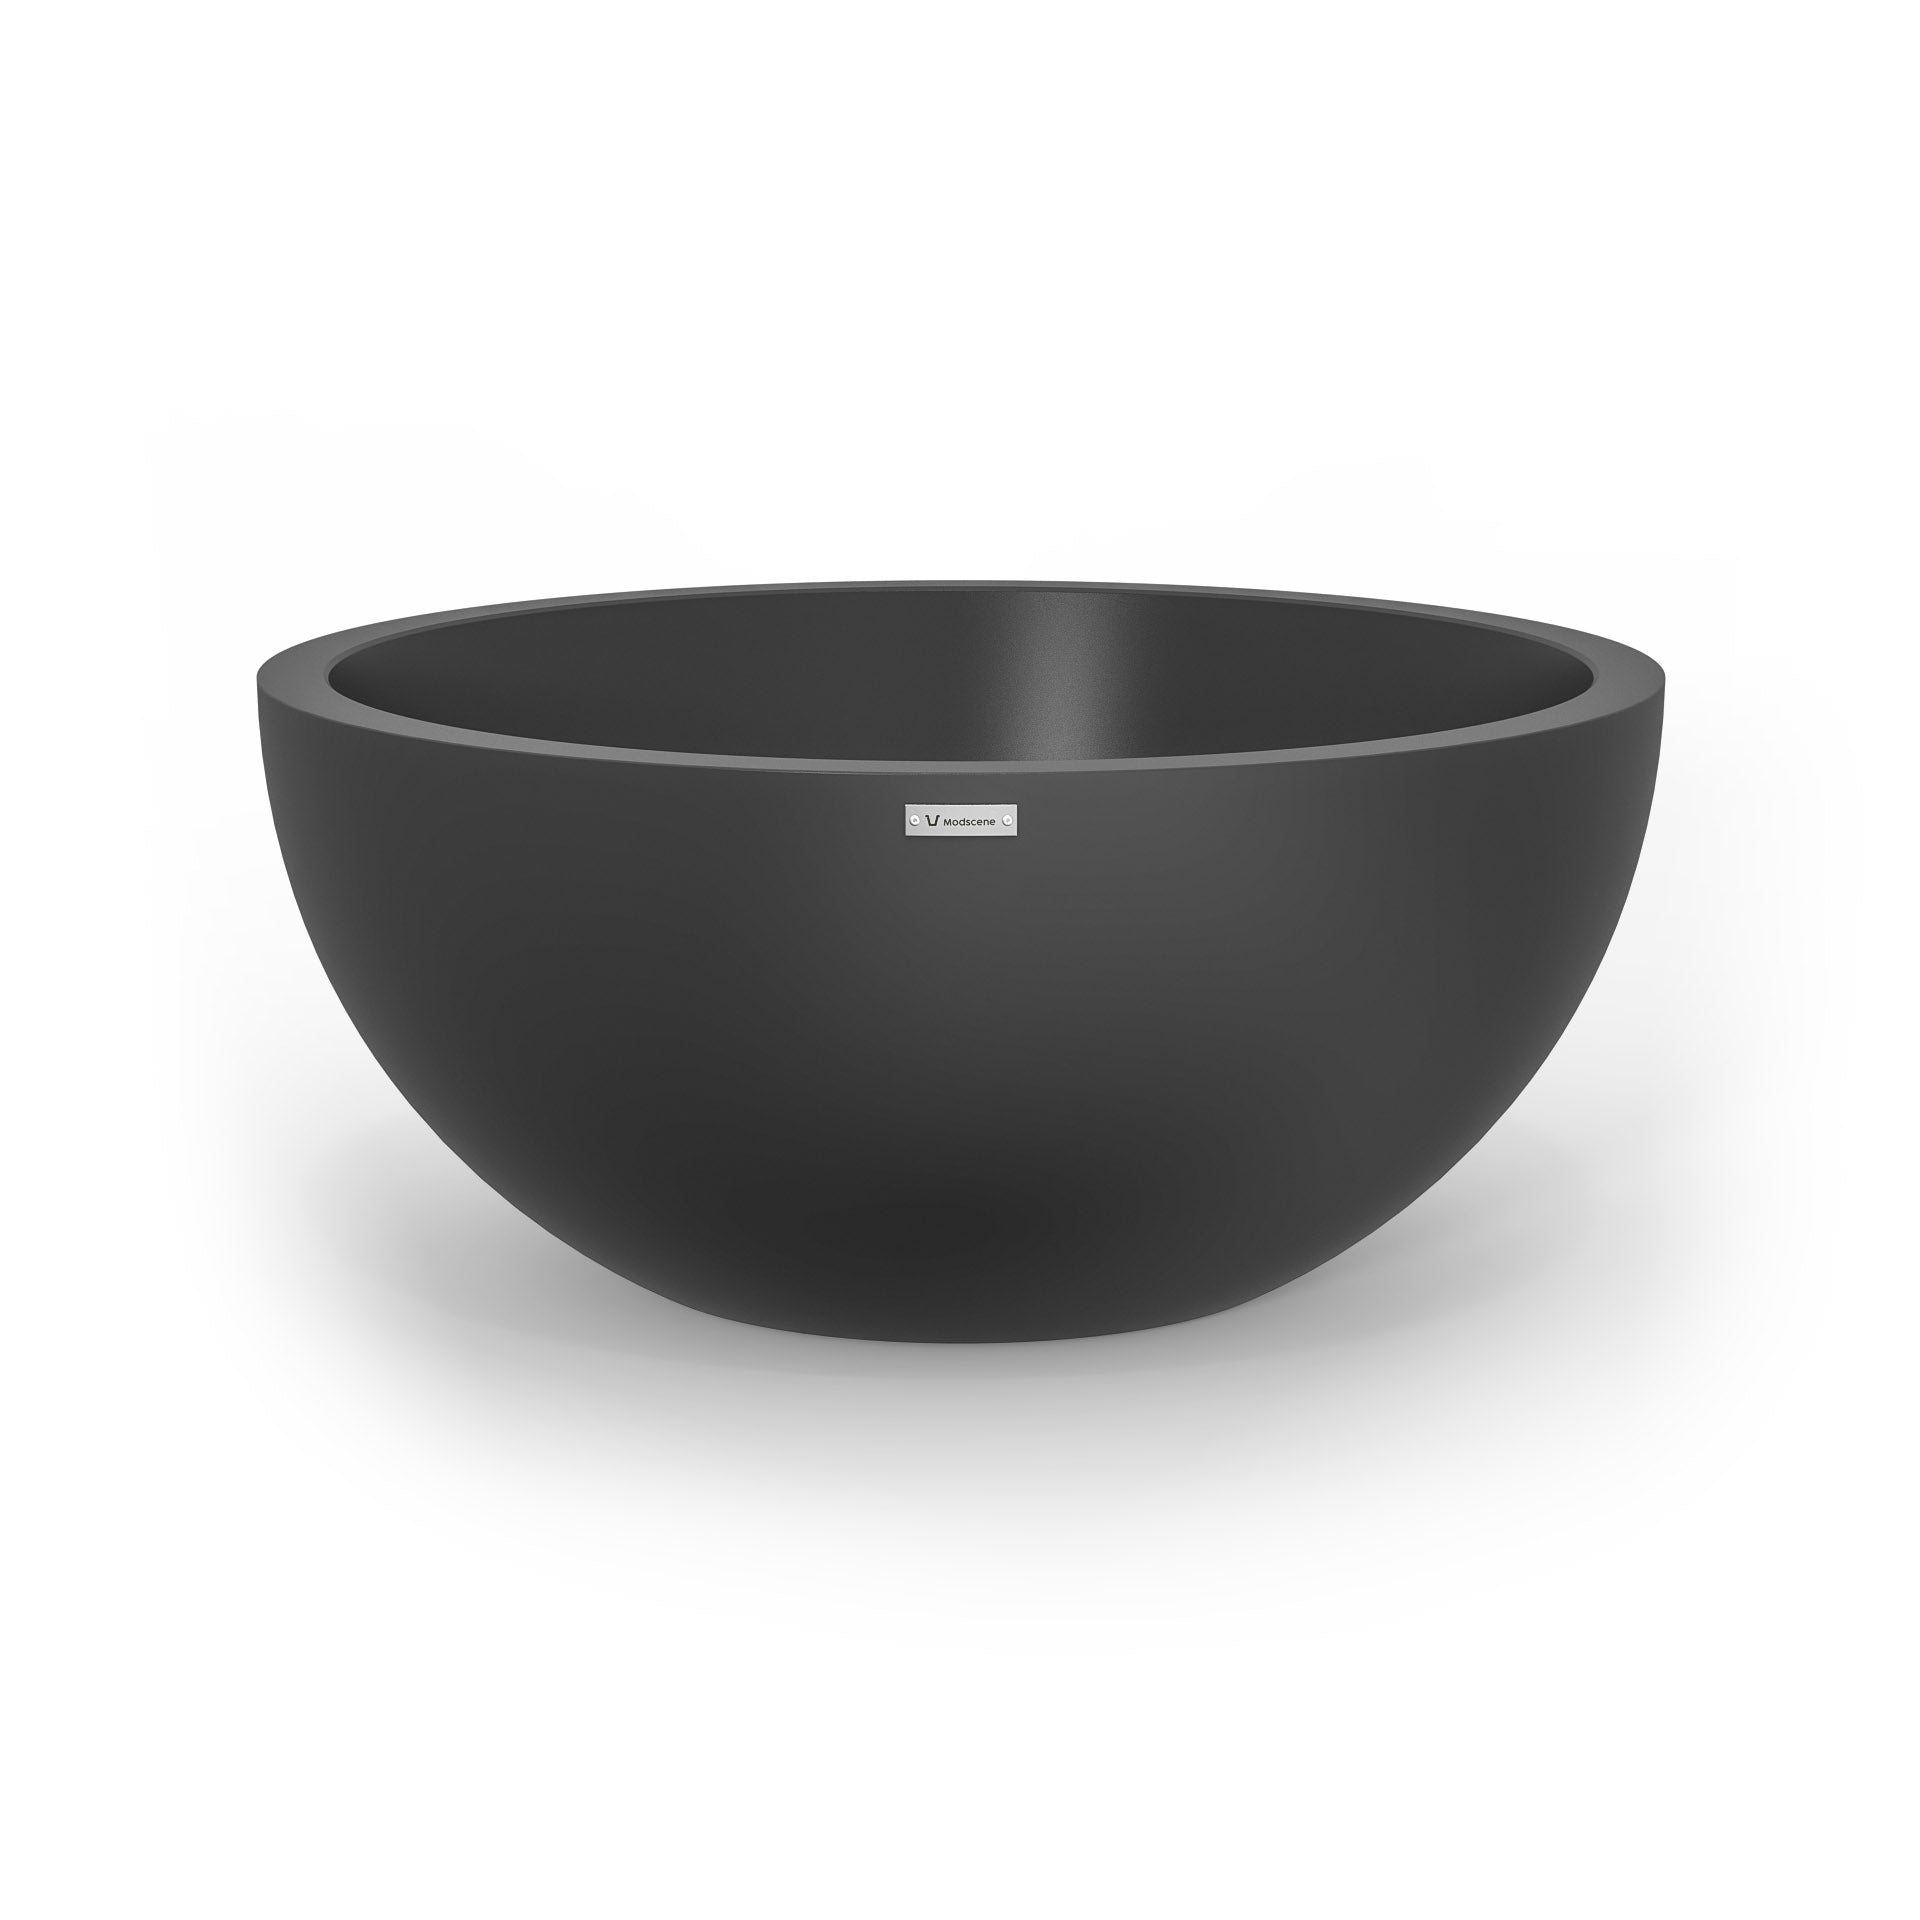 A large Modscene planter bowl in a dark grey colour.